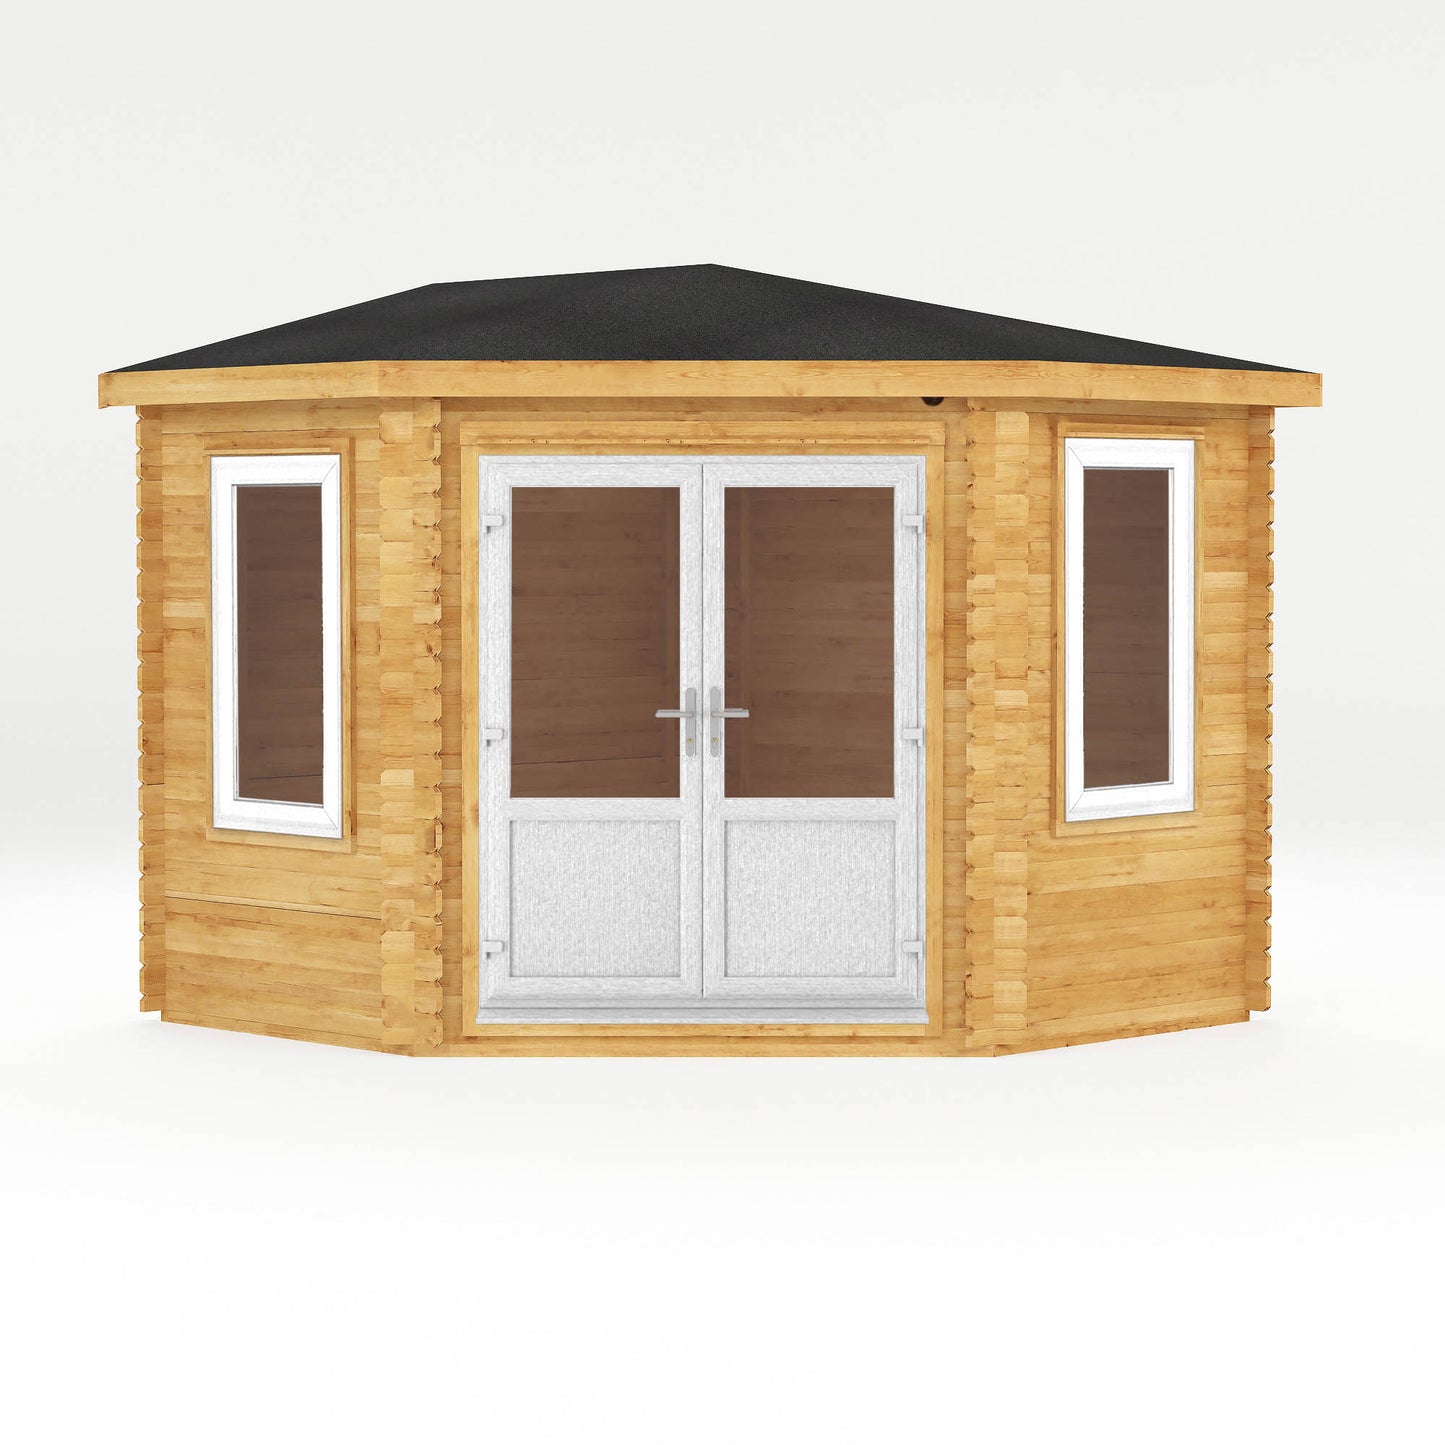 The 3m x 3m Goldcrest Corner Log Cabin with White UPVC